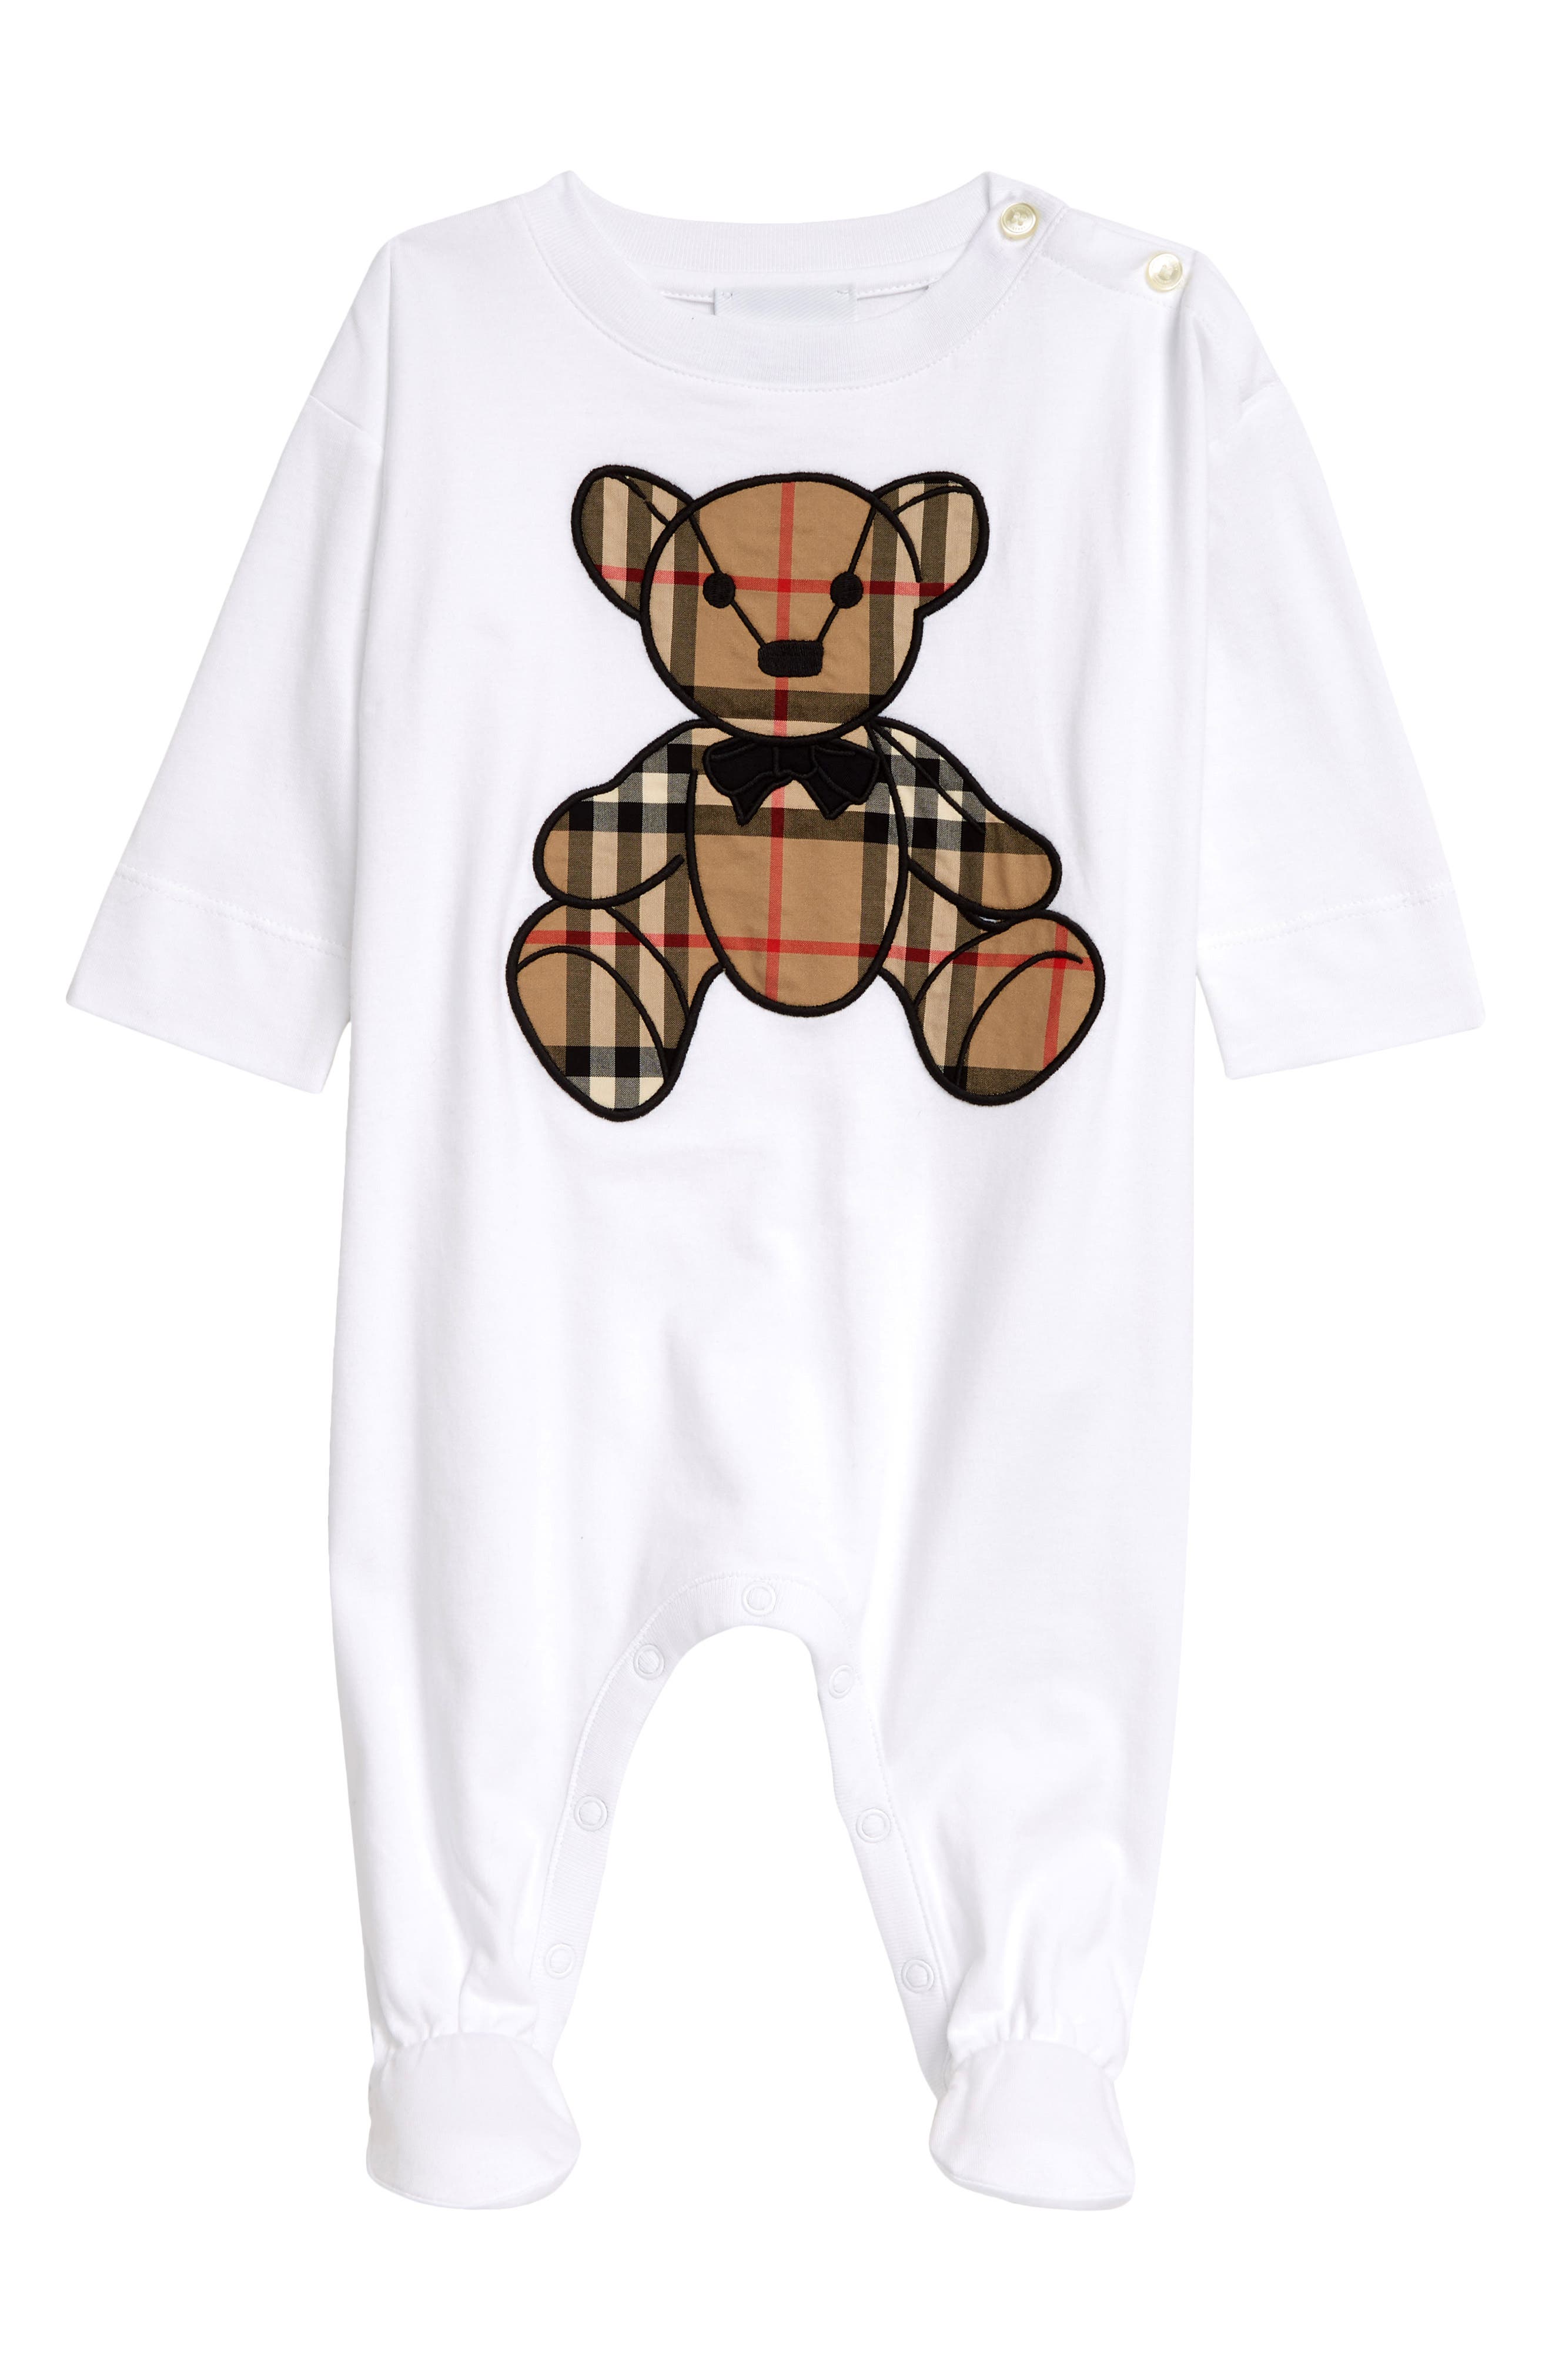 designer baby clothes sale